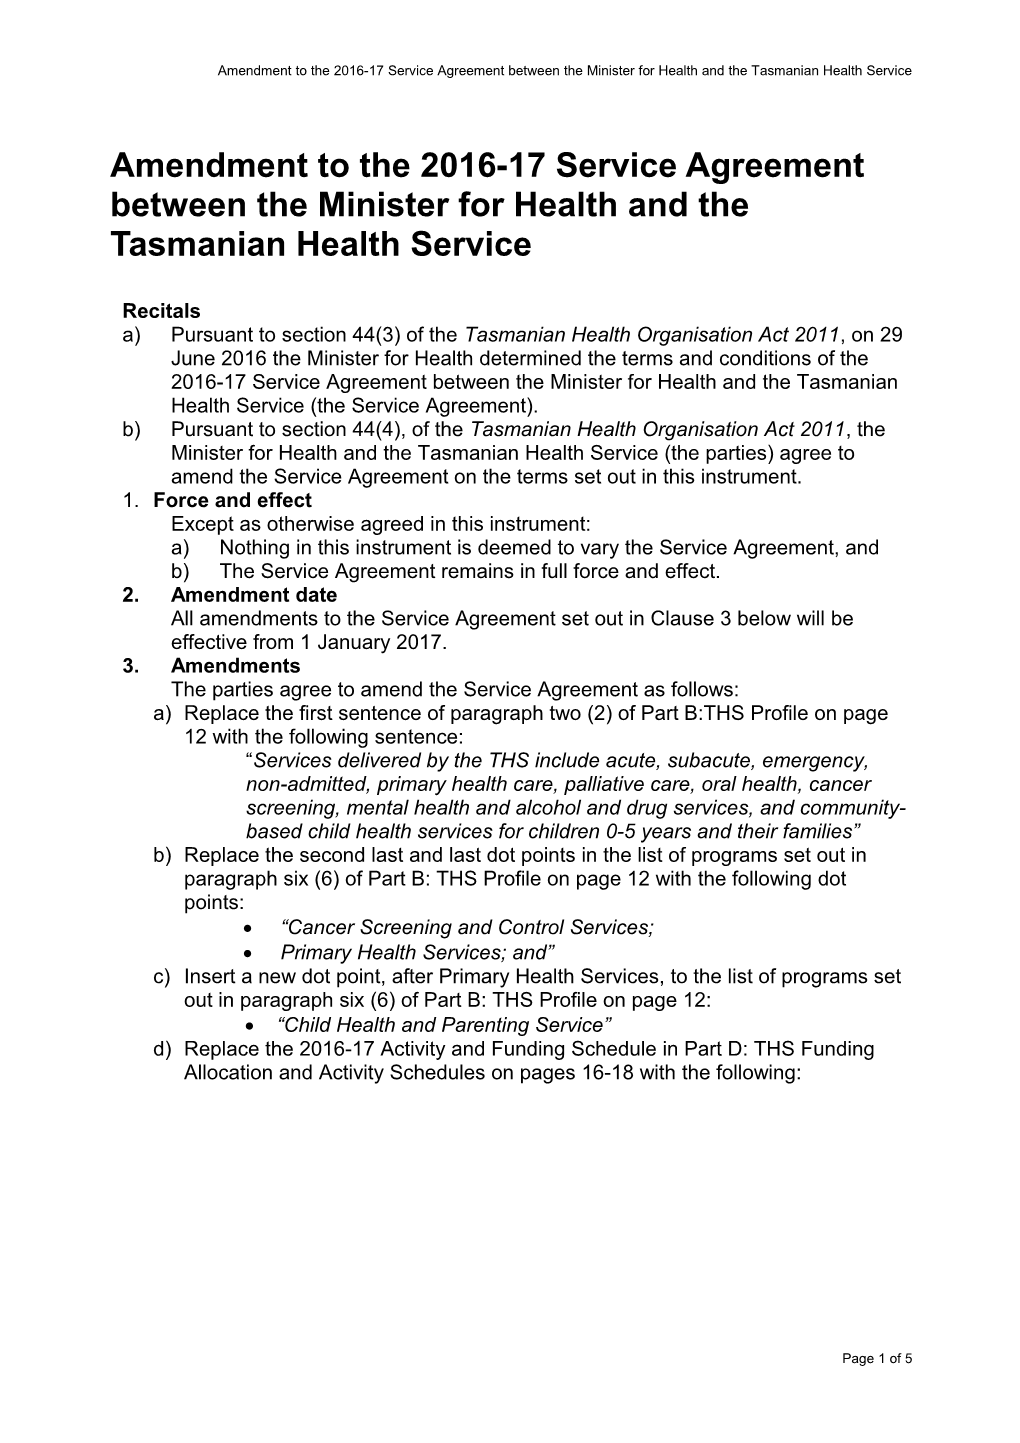 2016-17 Service Agreement - Tasmanian Health Service Amendment Attachment 1 - Accessible